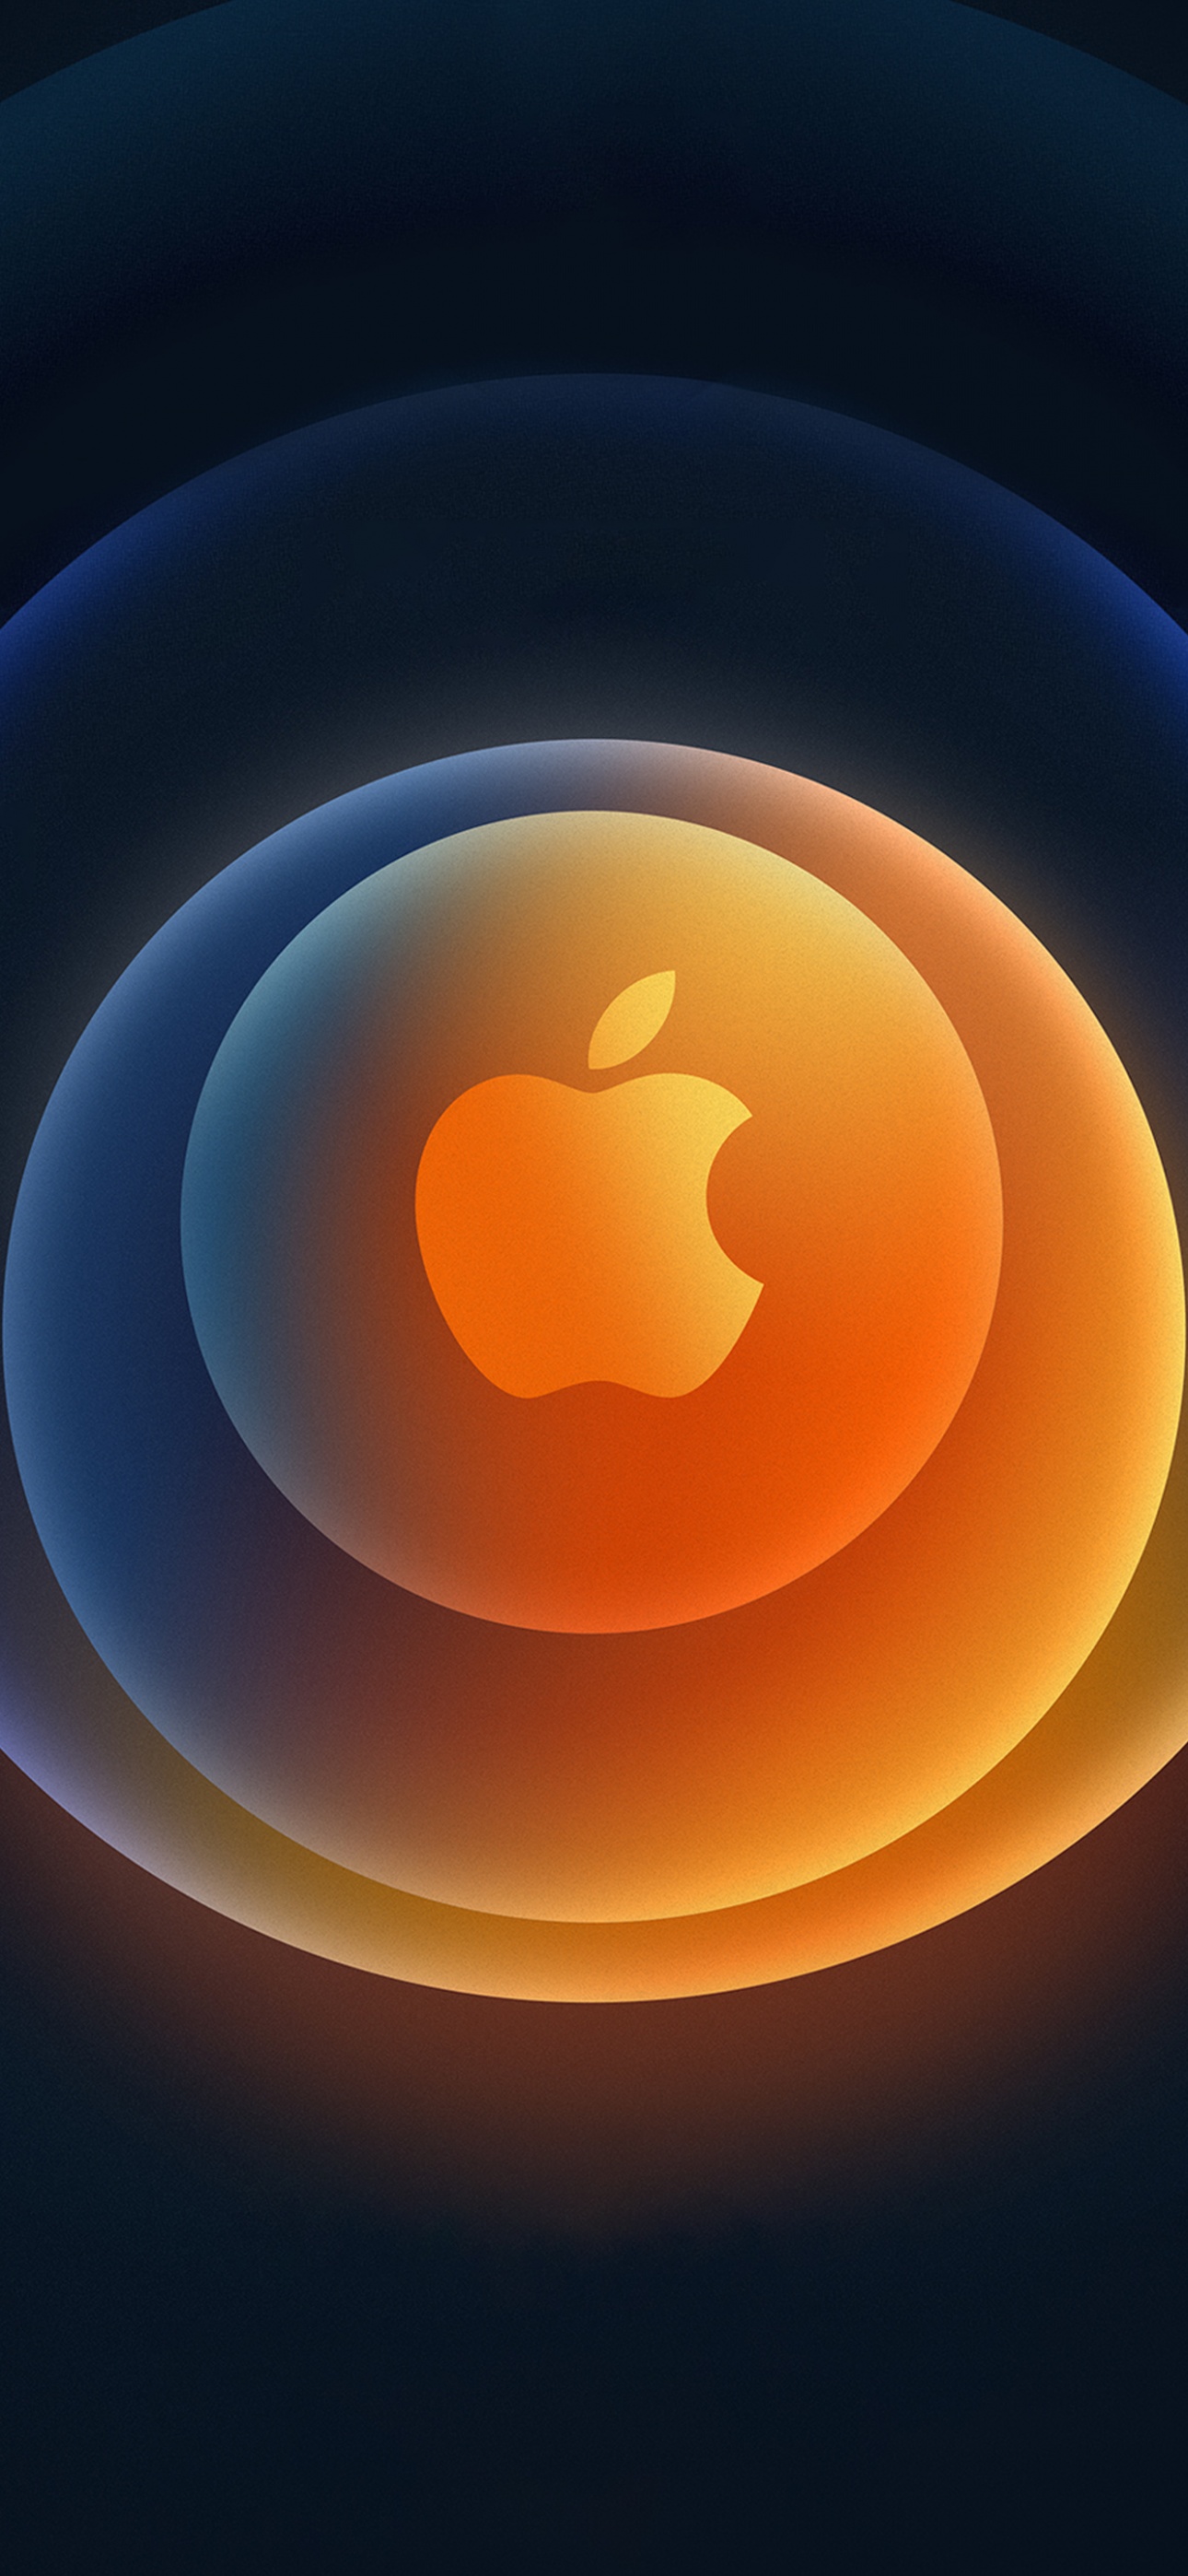 Apple Logo iPhone Wallpaper - 18